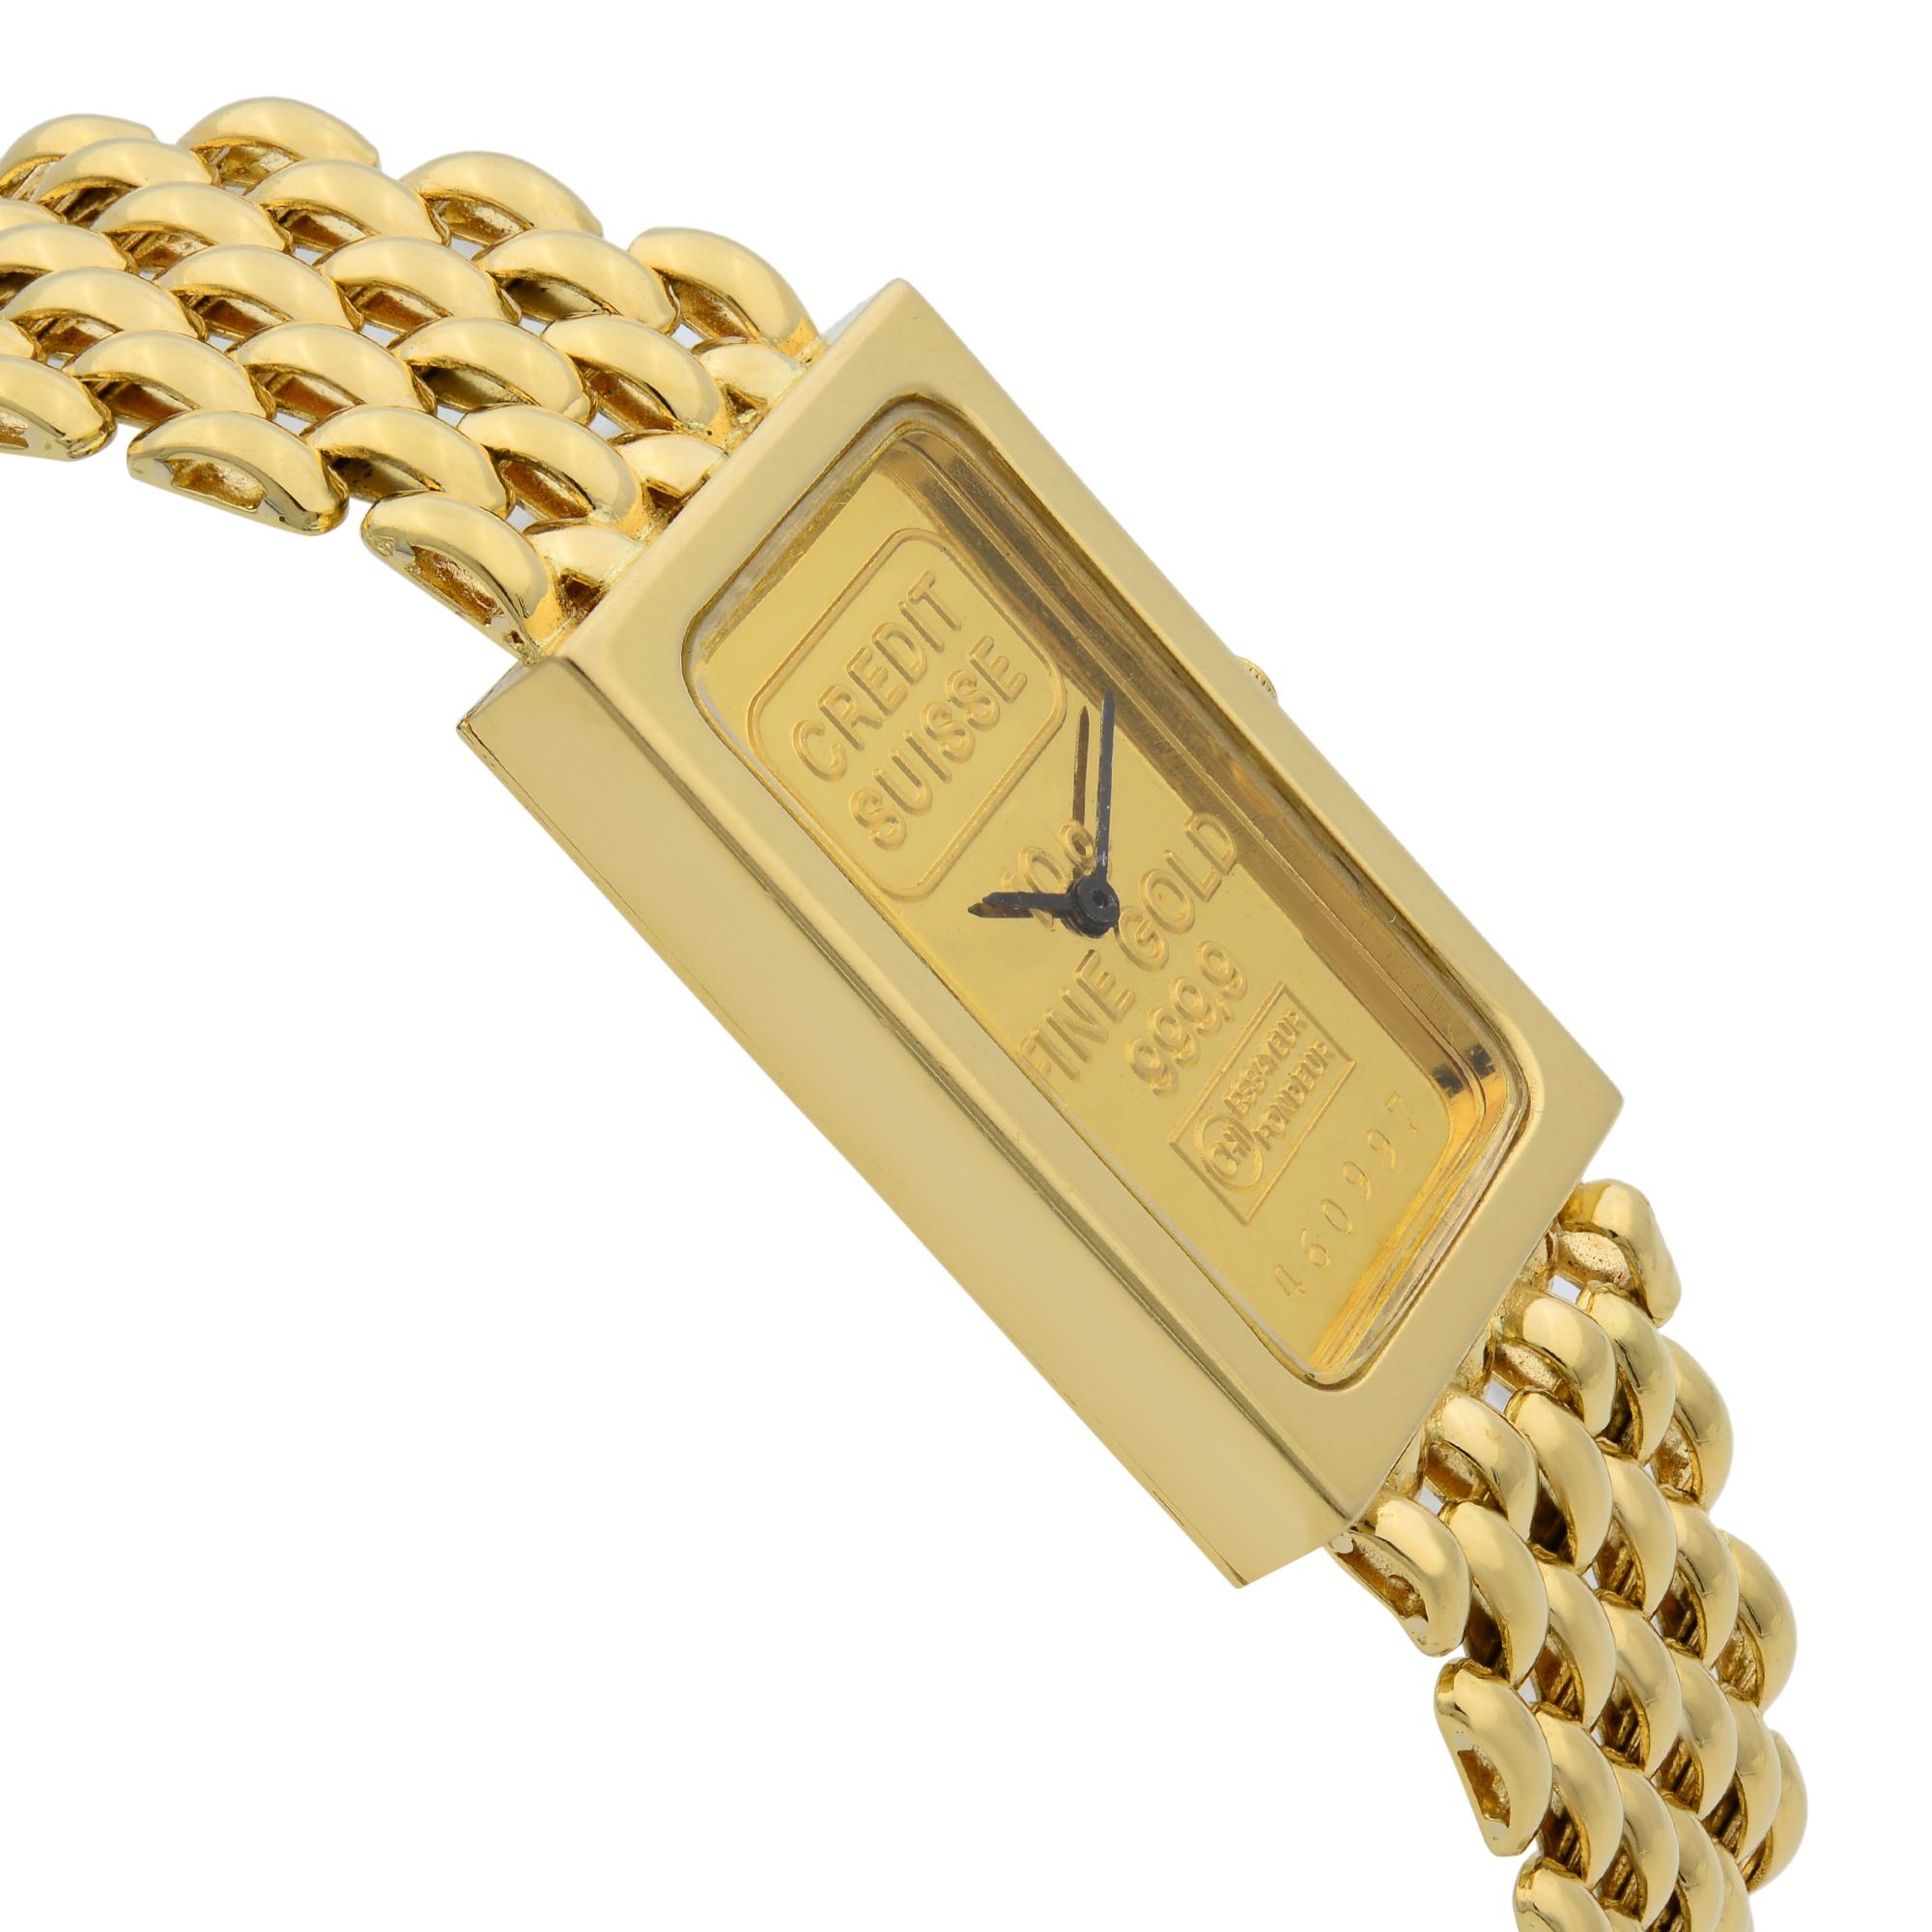 credit suisse fine gold 999.9 watch